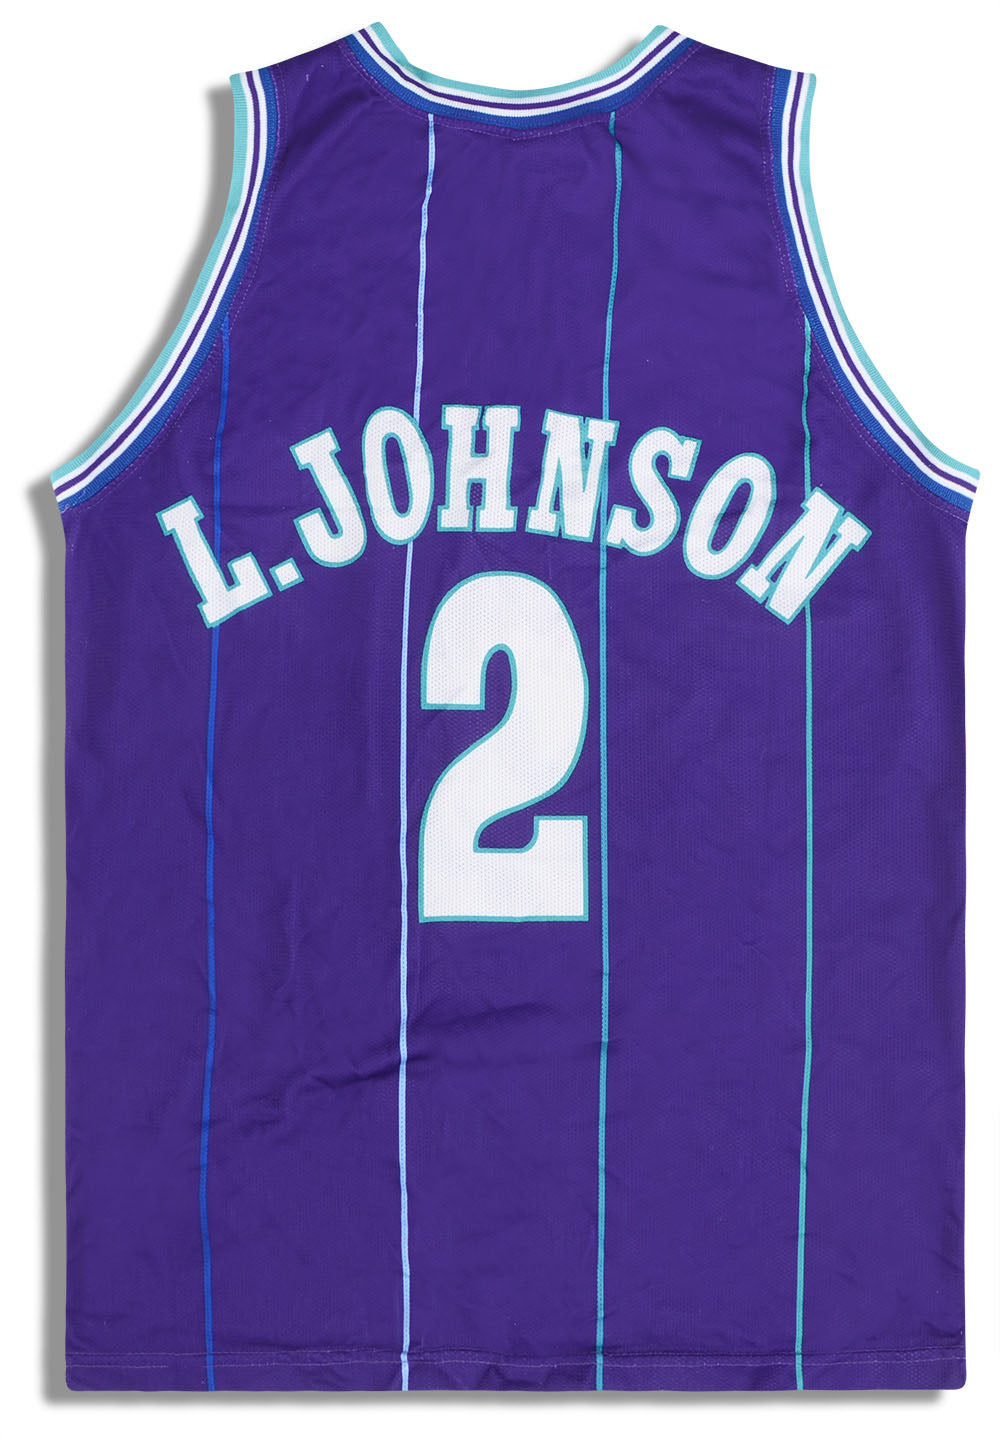 johnson purple jersey